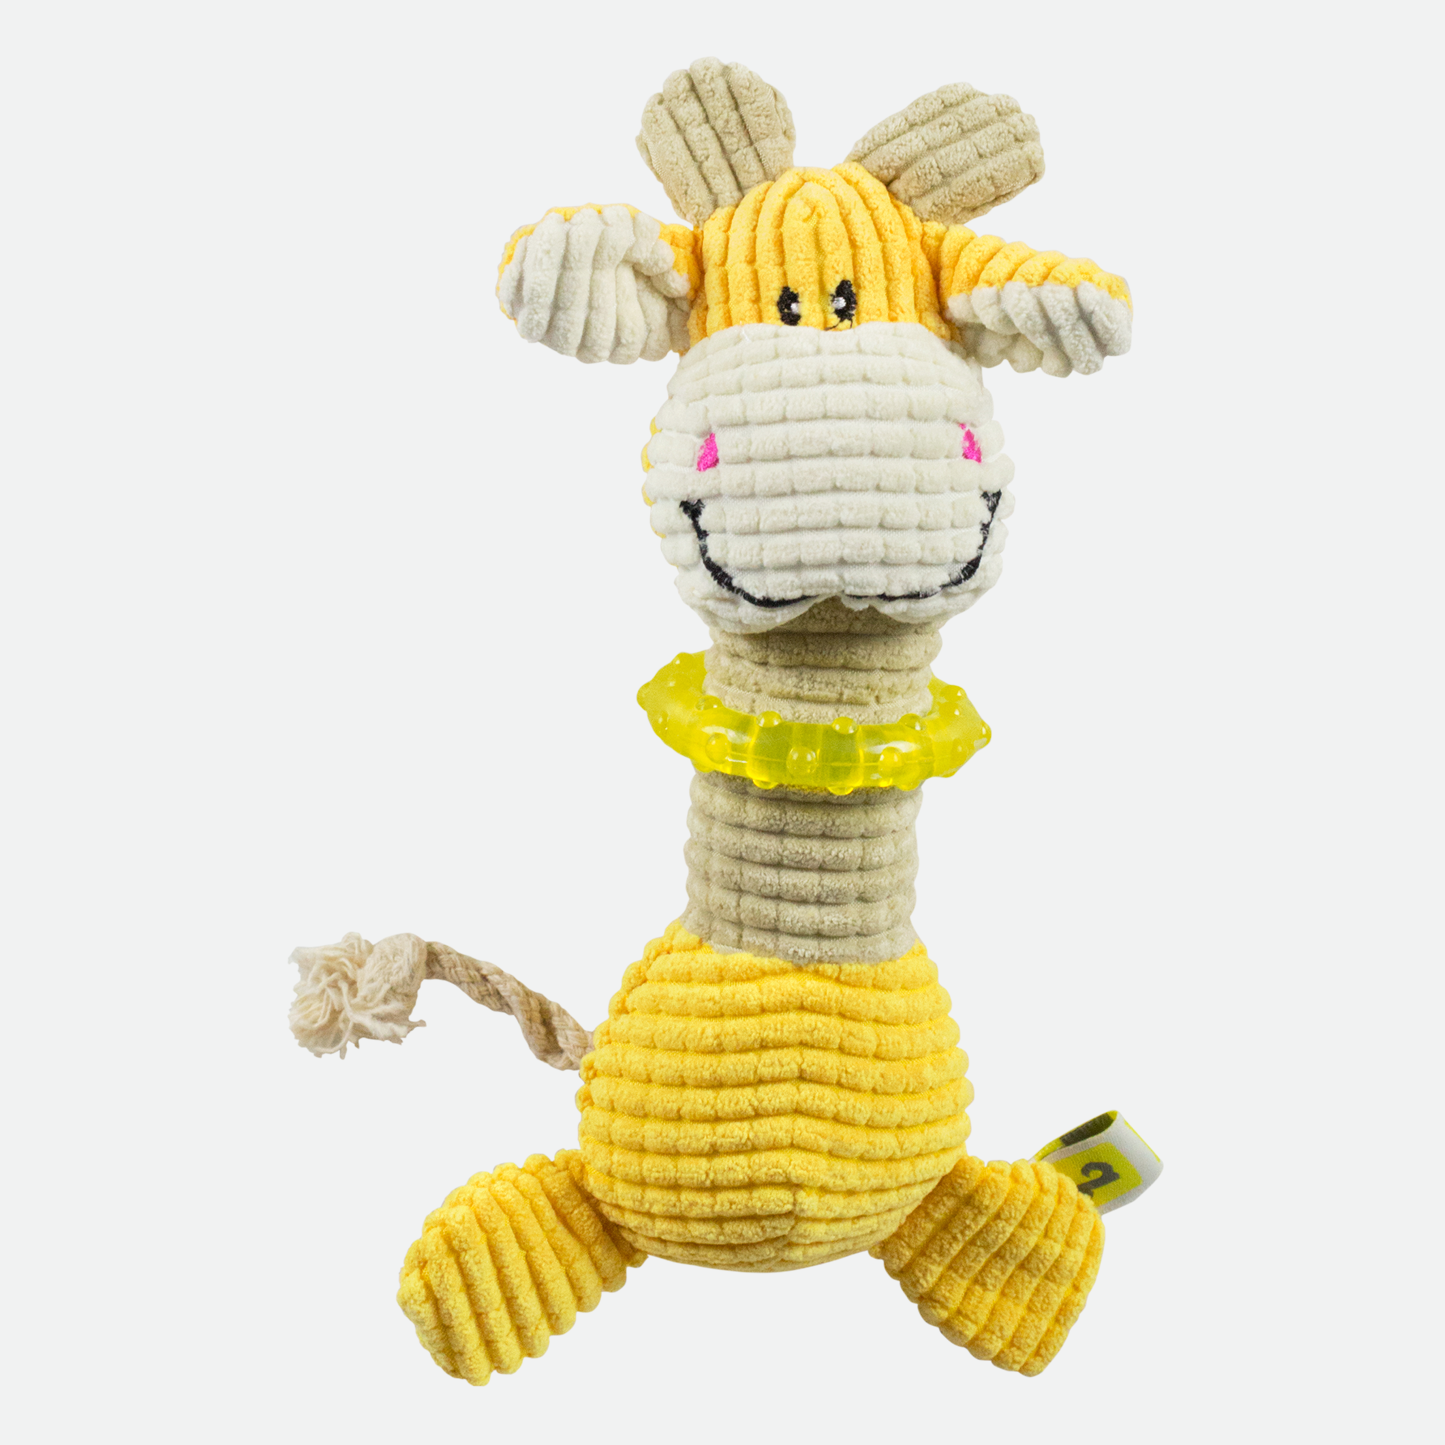 Plush toy for puppy dog, giraffe style